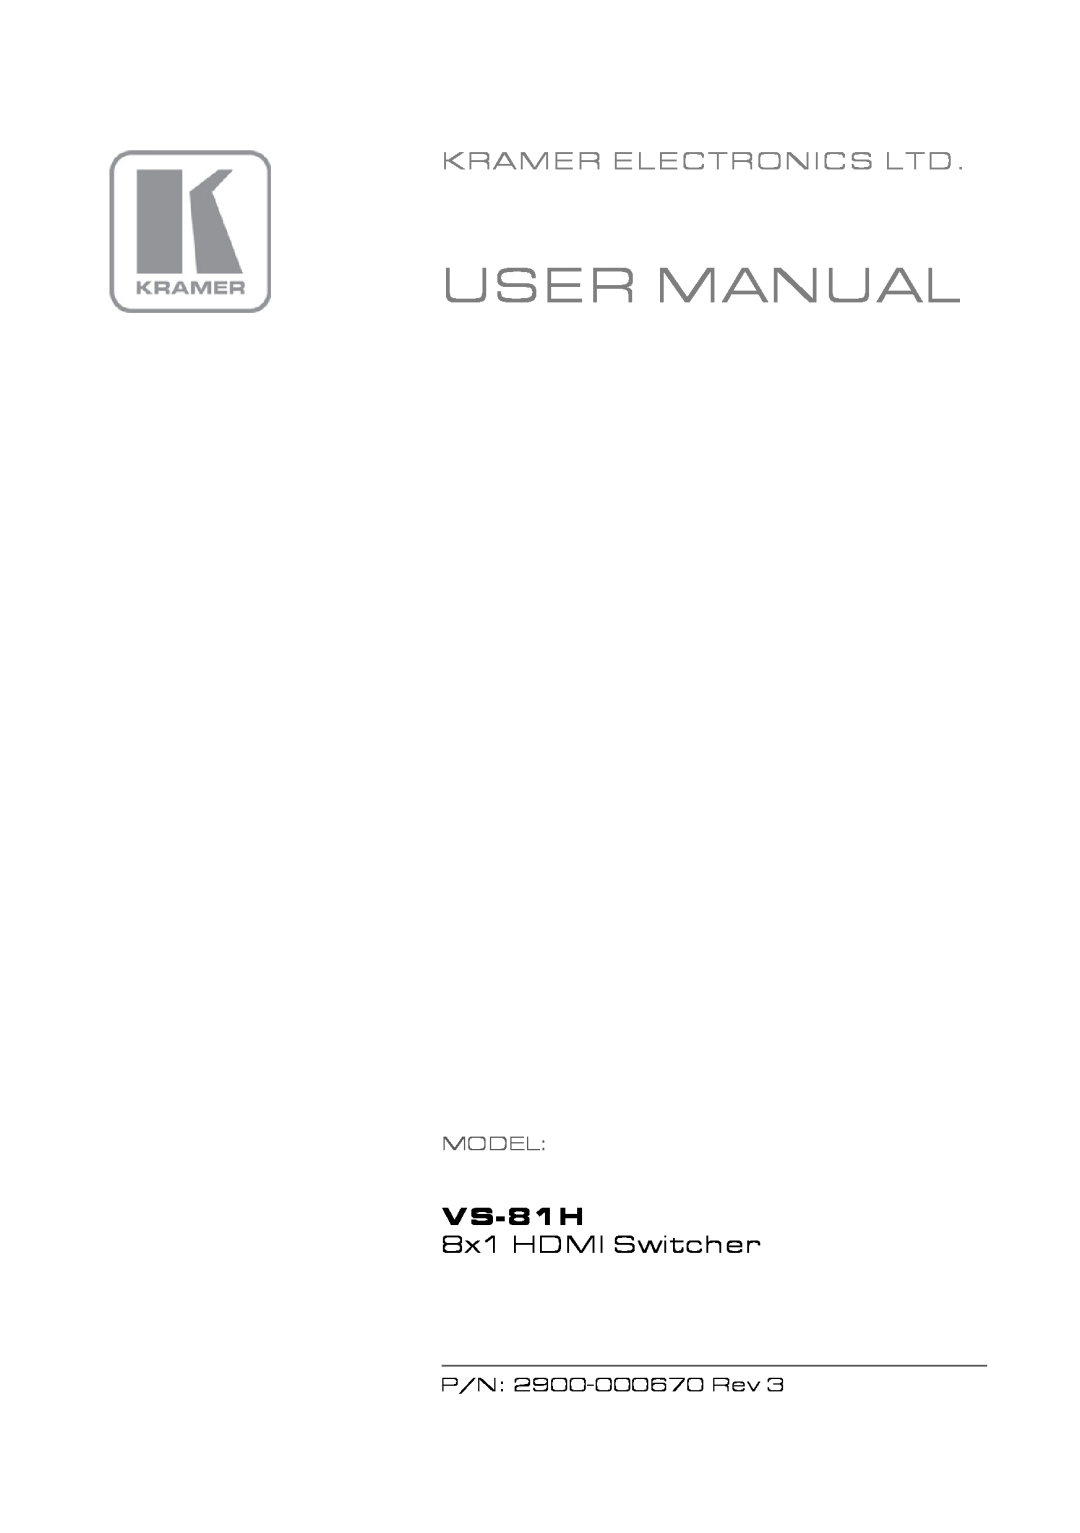 Kramer Electronics VS-81H user manual 8x1 HDMI Switcher, Model 